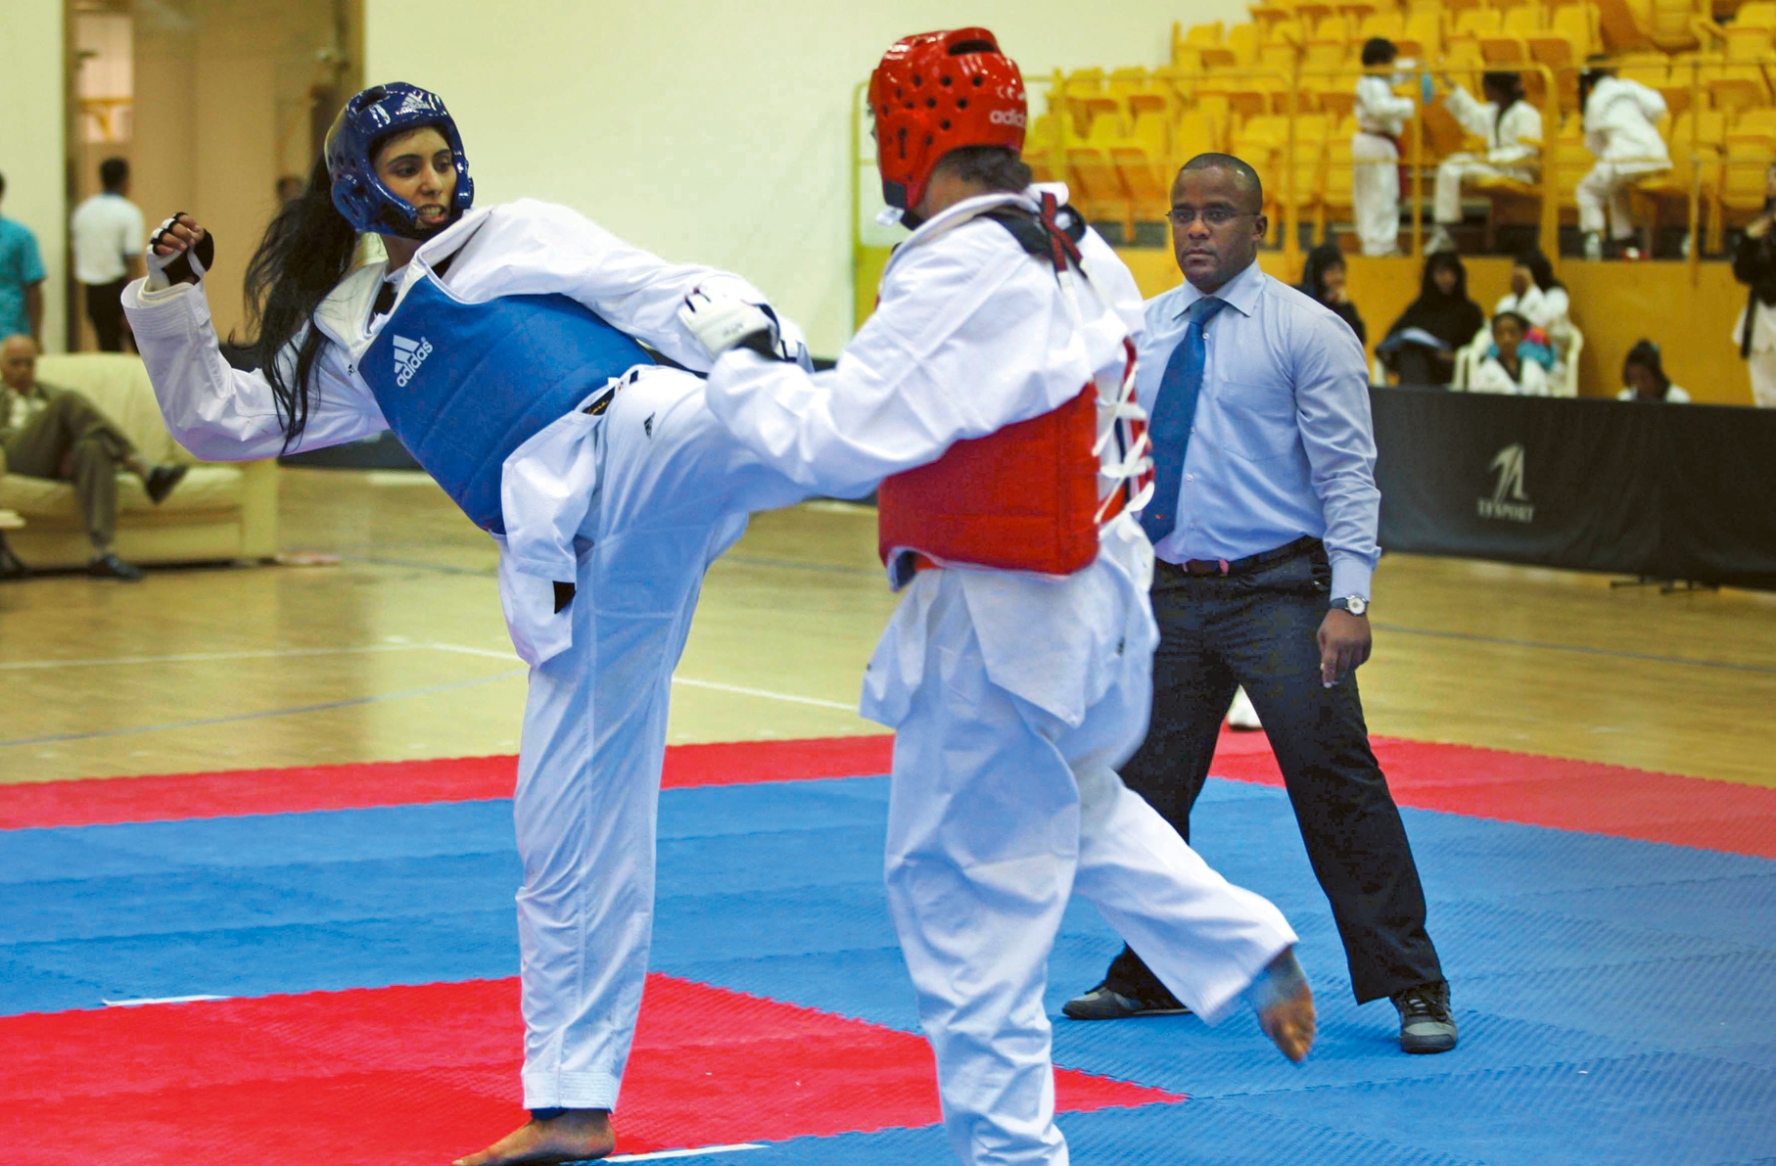 Fighting for taekwondo